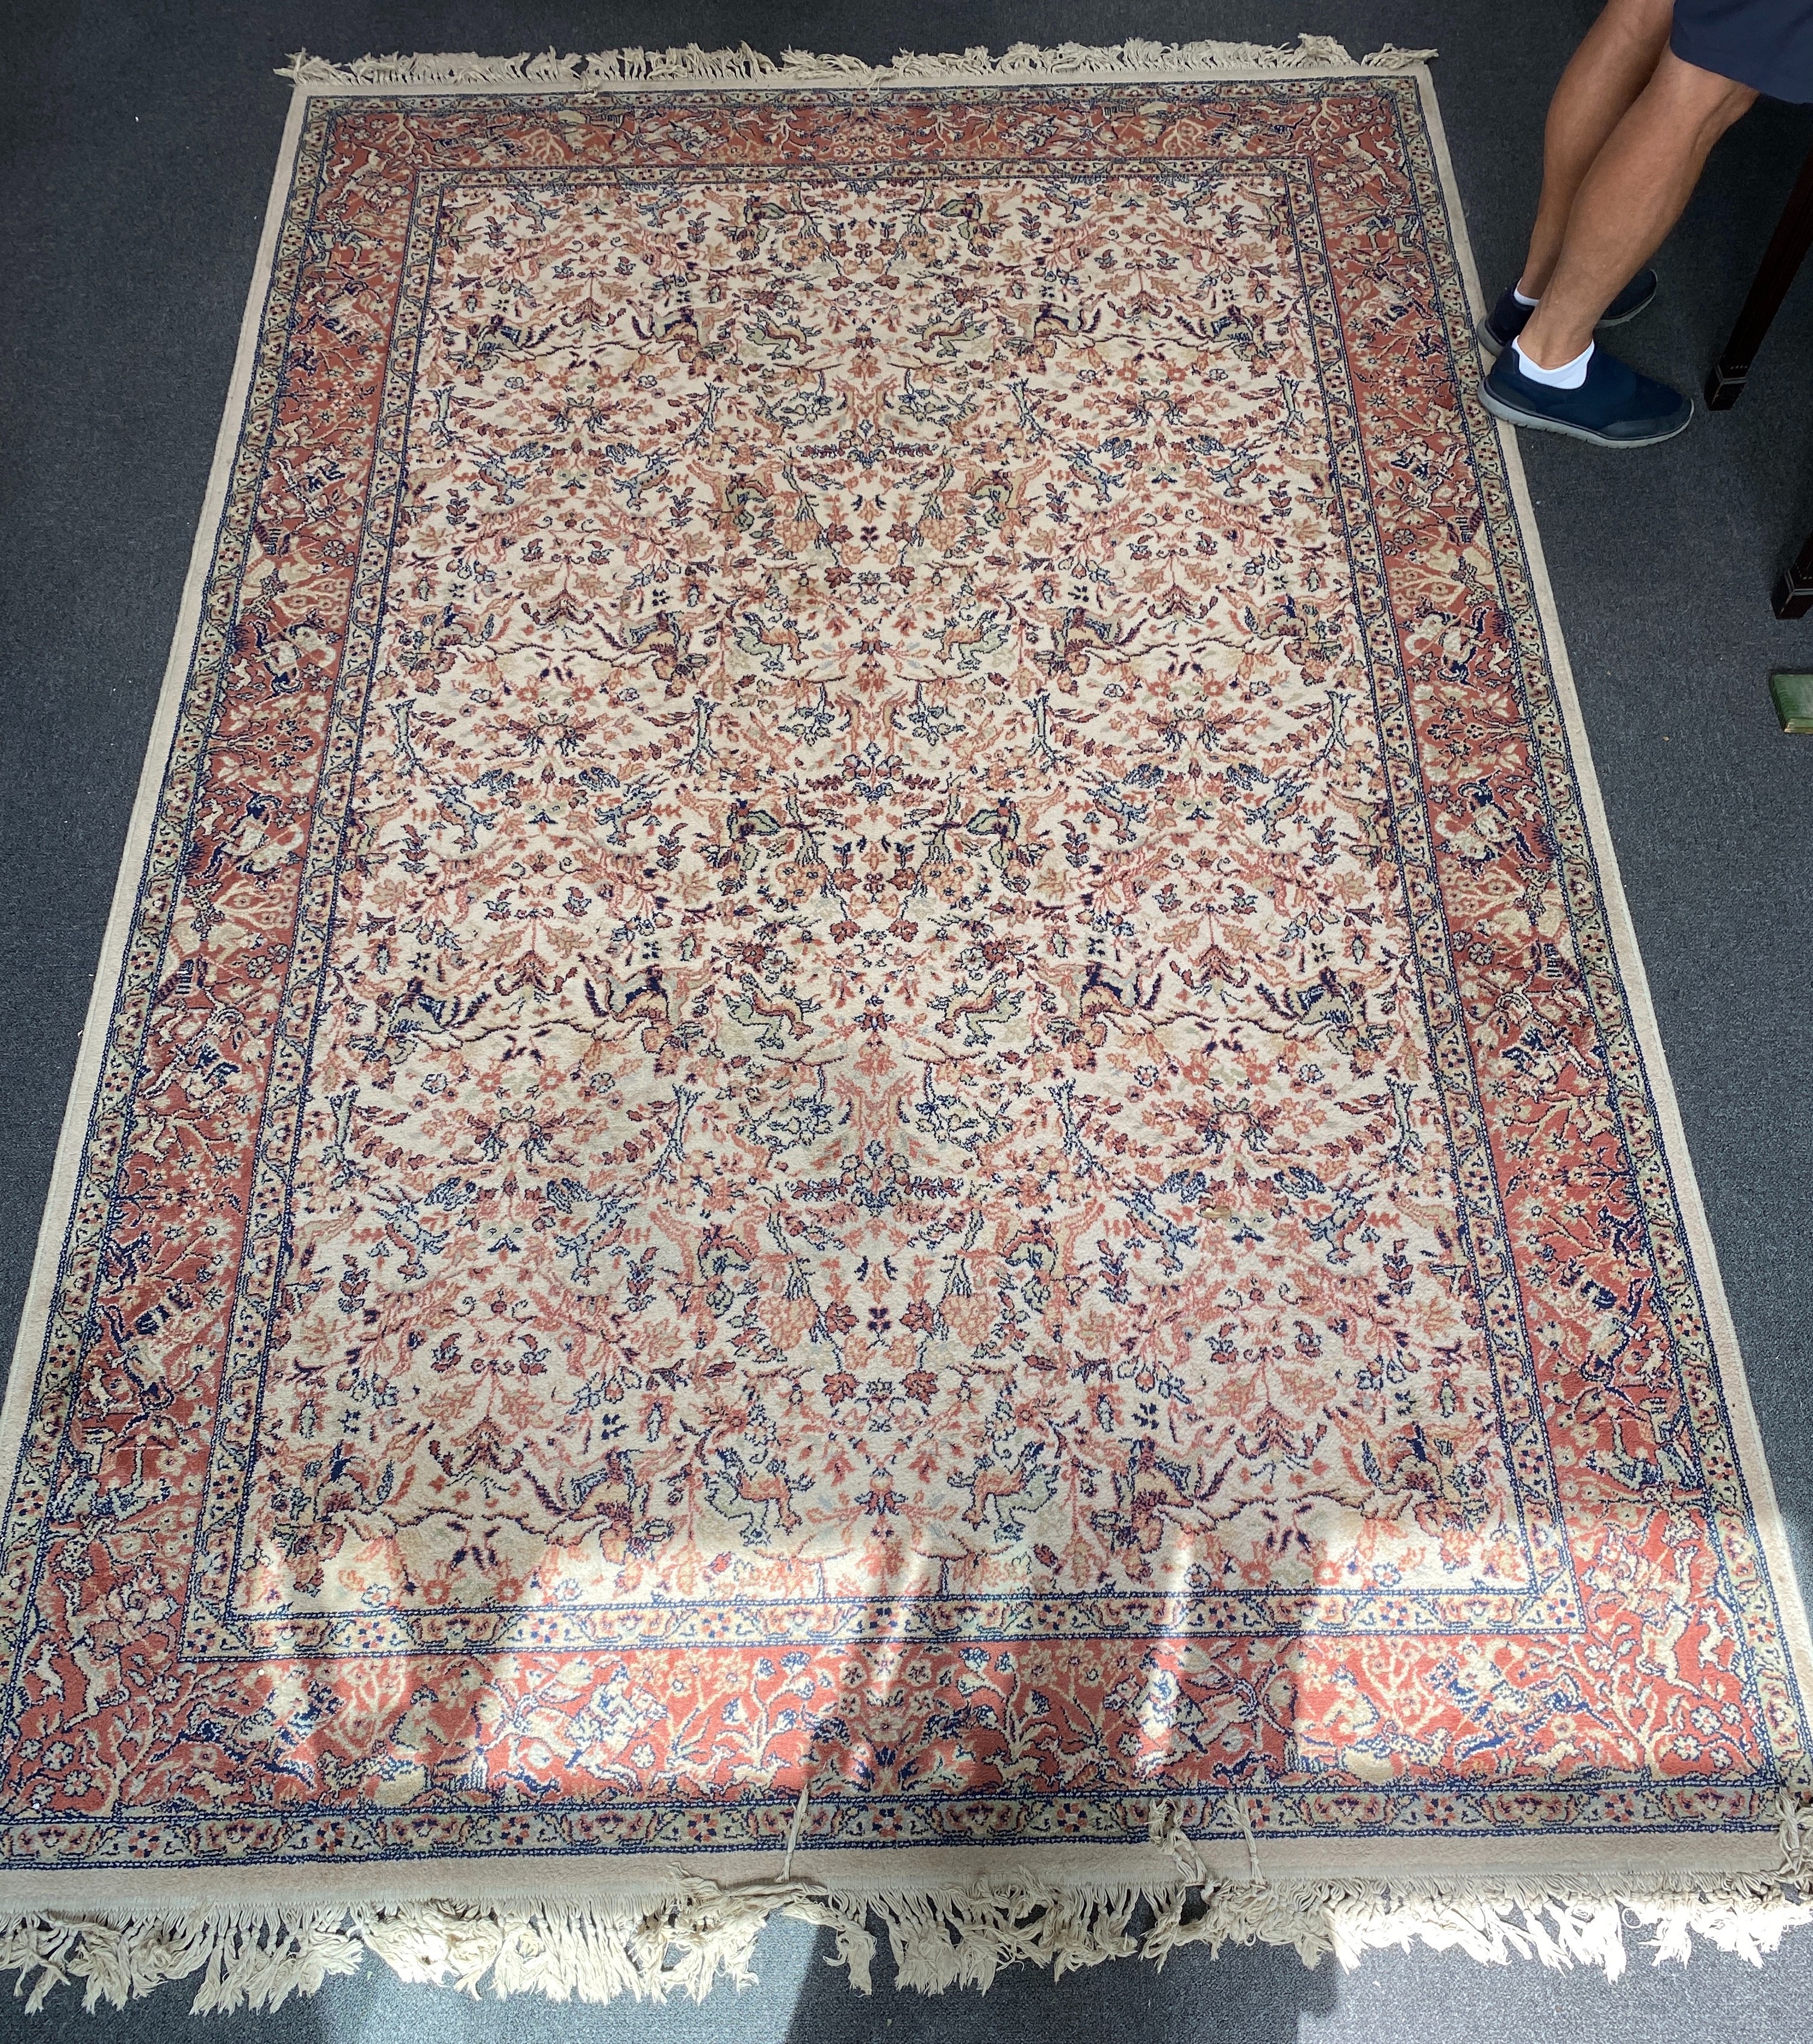 A Kashan ivory ground pictorial carpet, 296 x 200cm